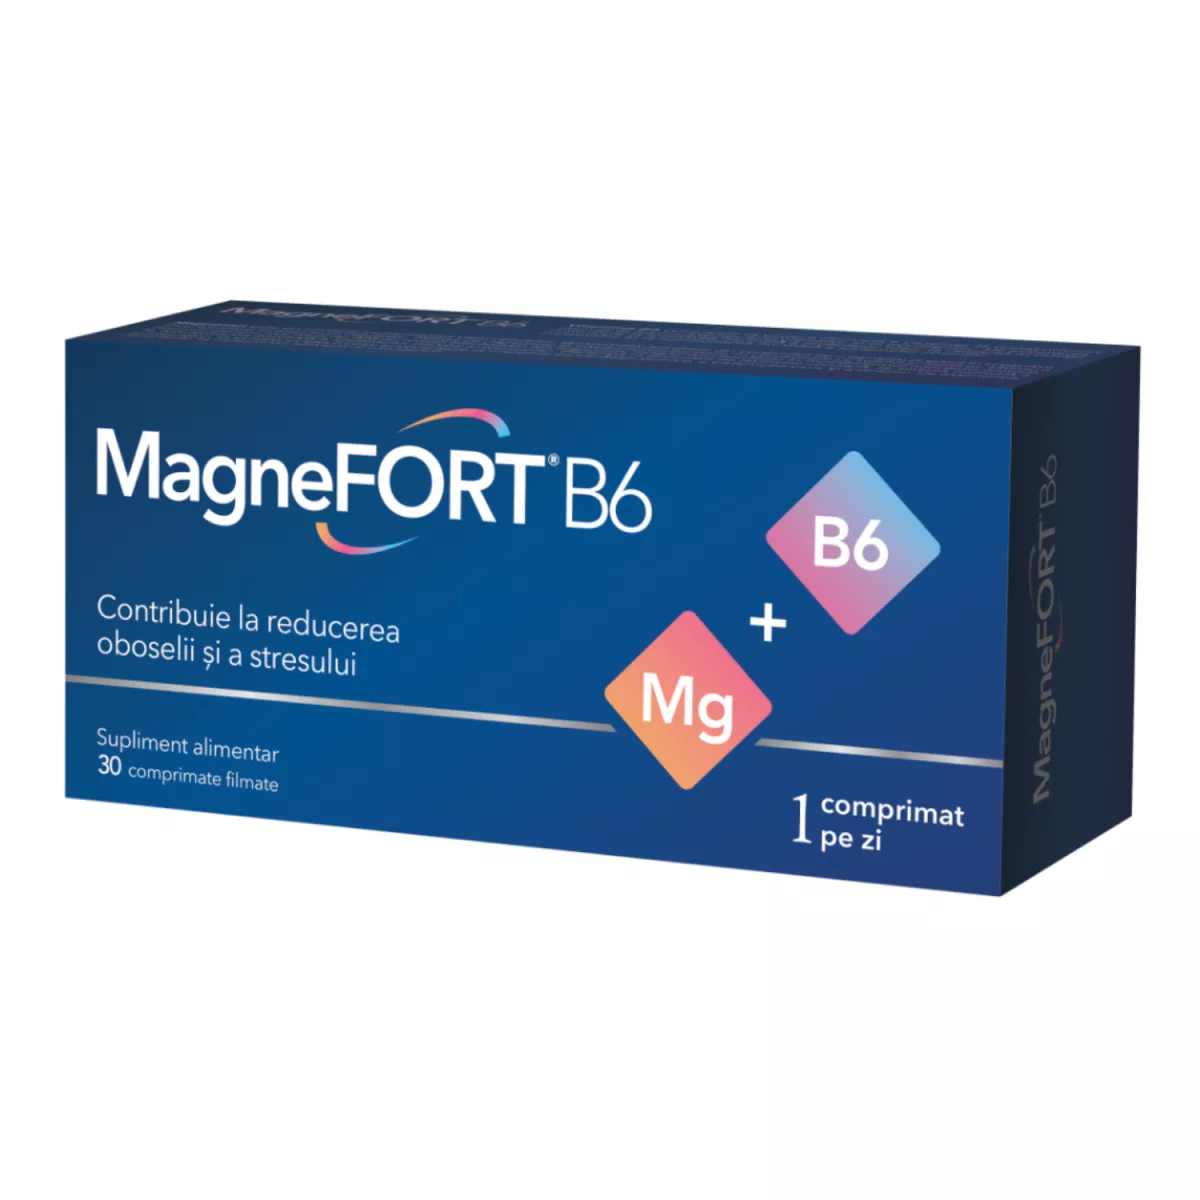 Magnefort B6, 30 drajeuri, Biofarm , [],nordpharm.ro